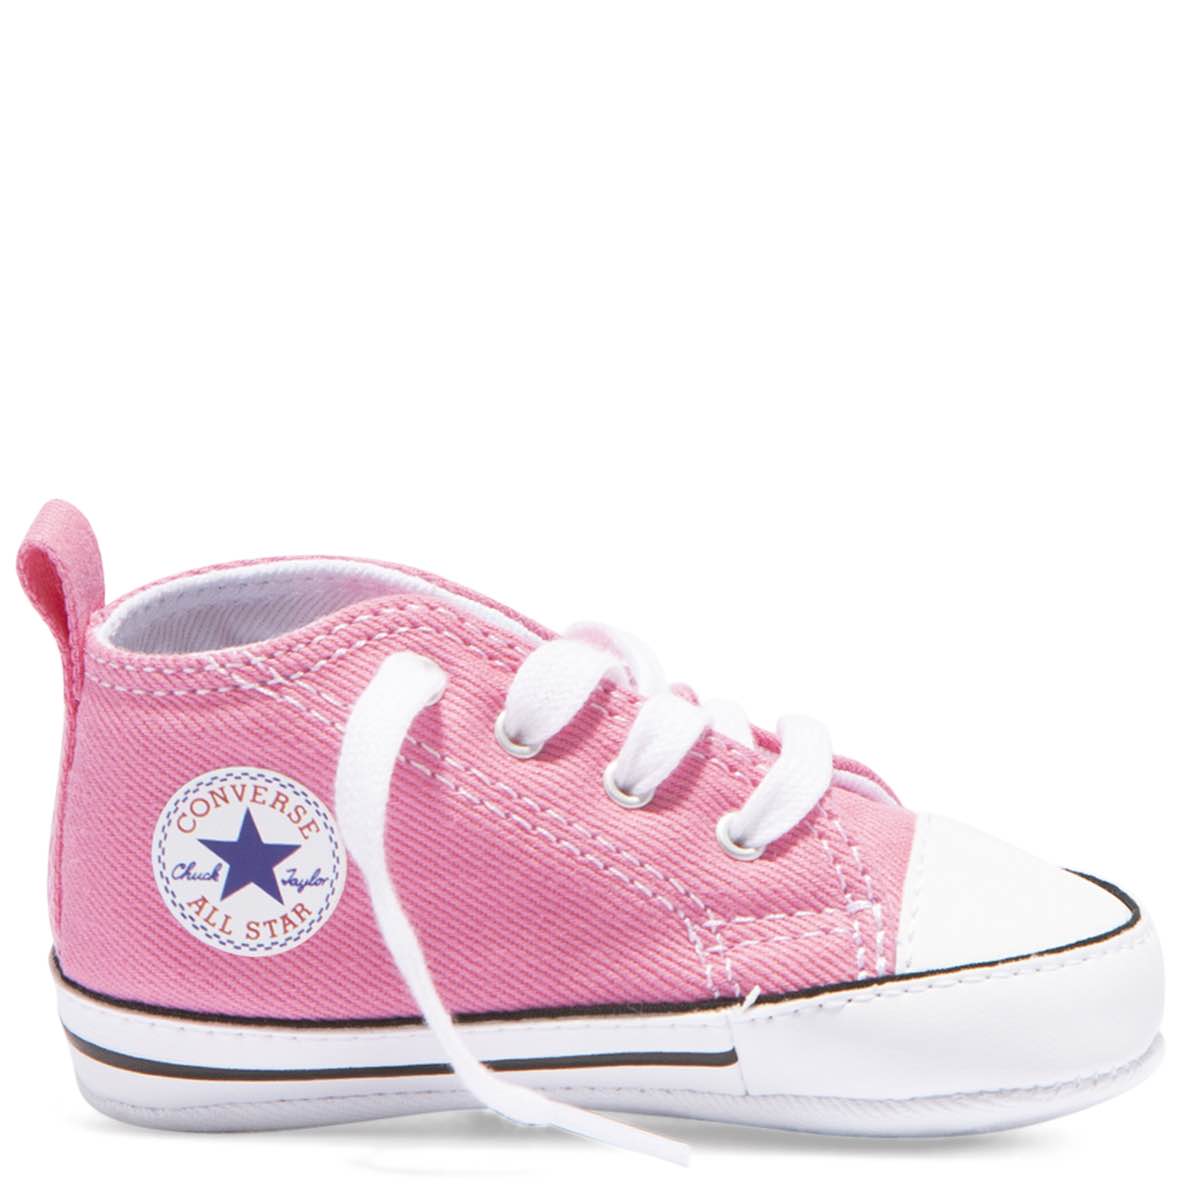 baby pink converse, OFF 70%,Buy!